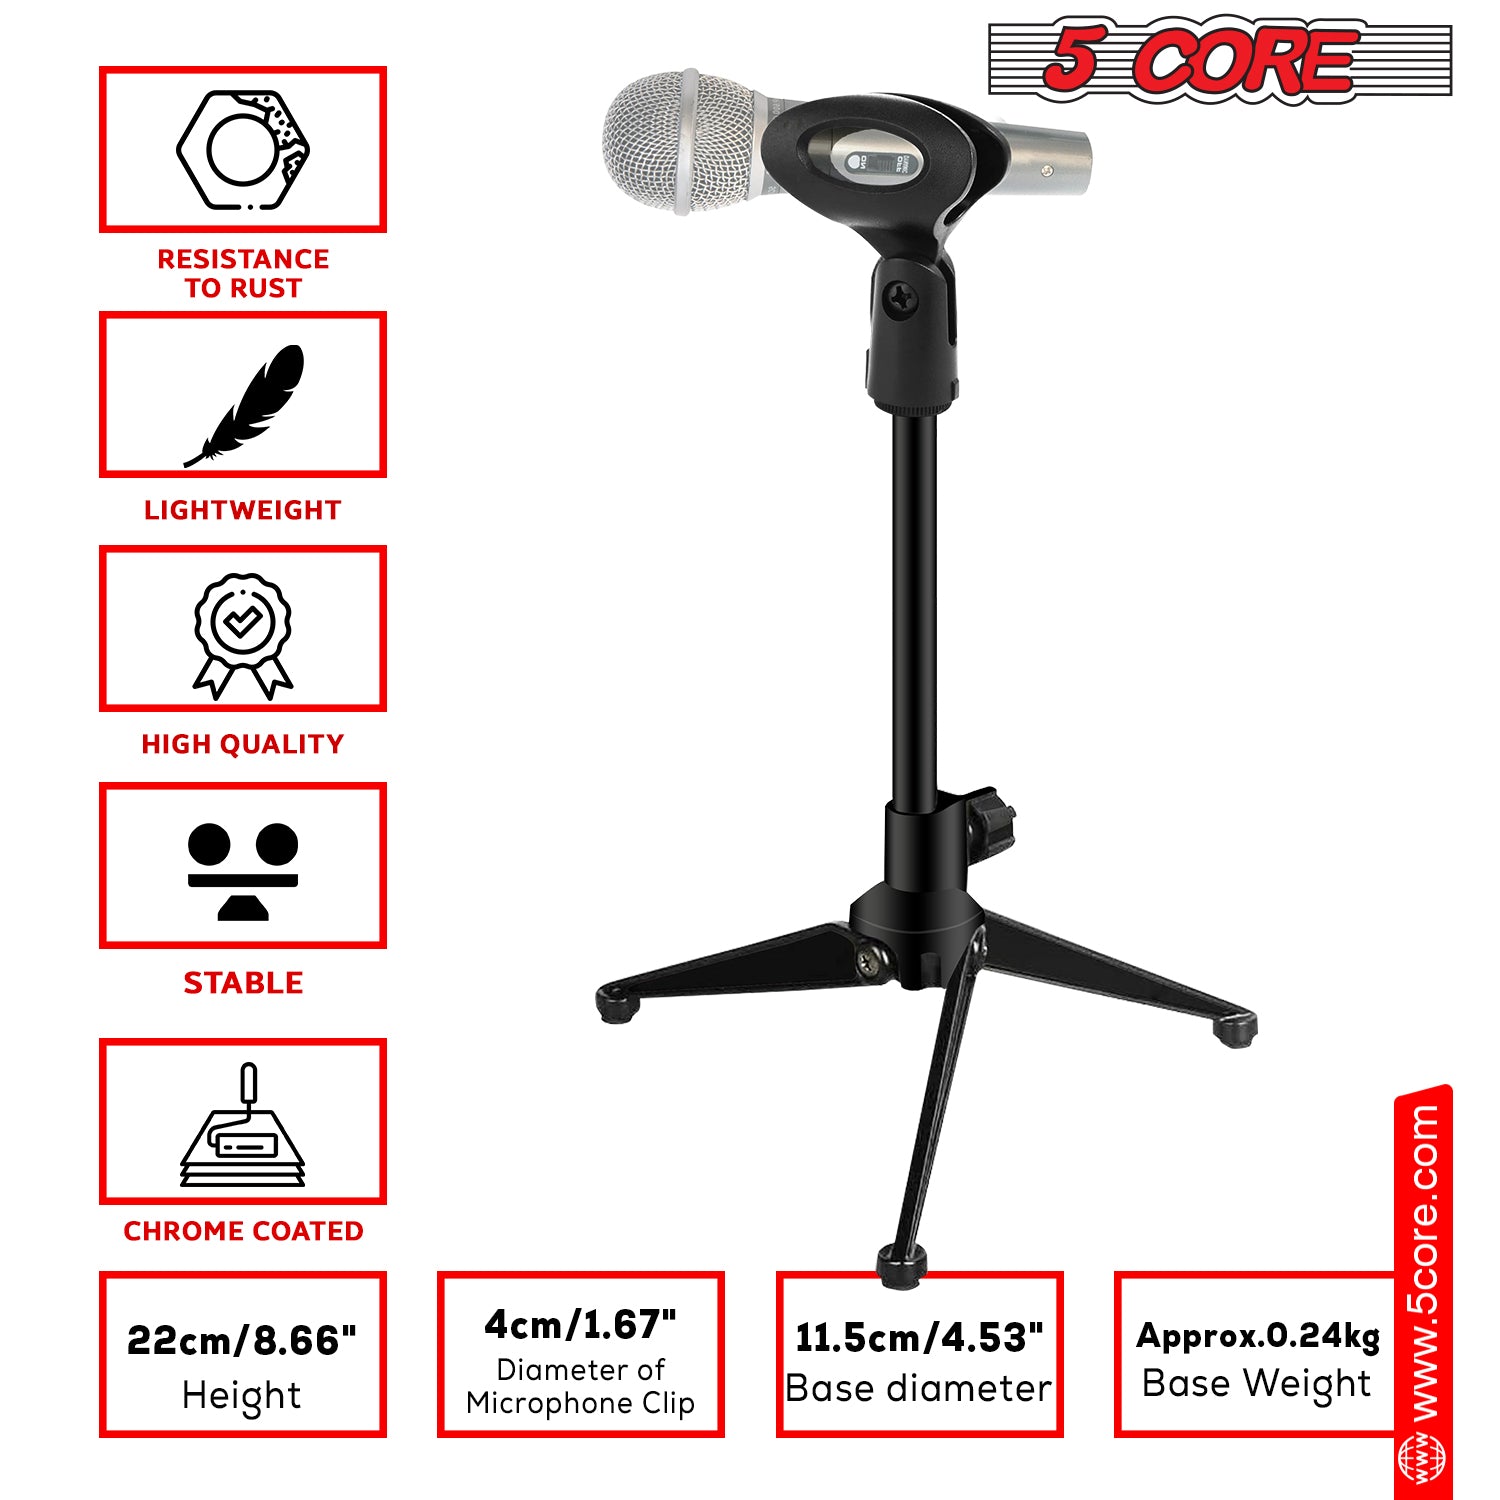 Portable Universal Desktop Microphone Stand